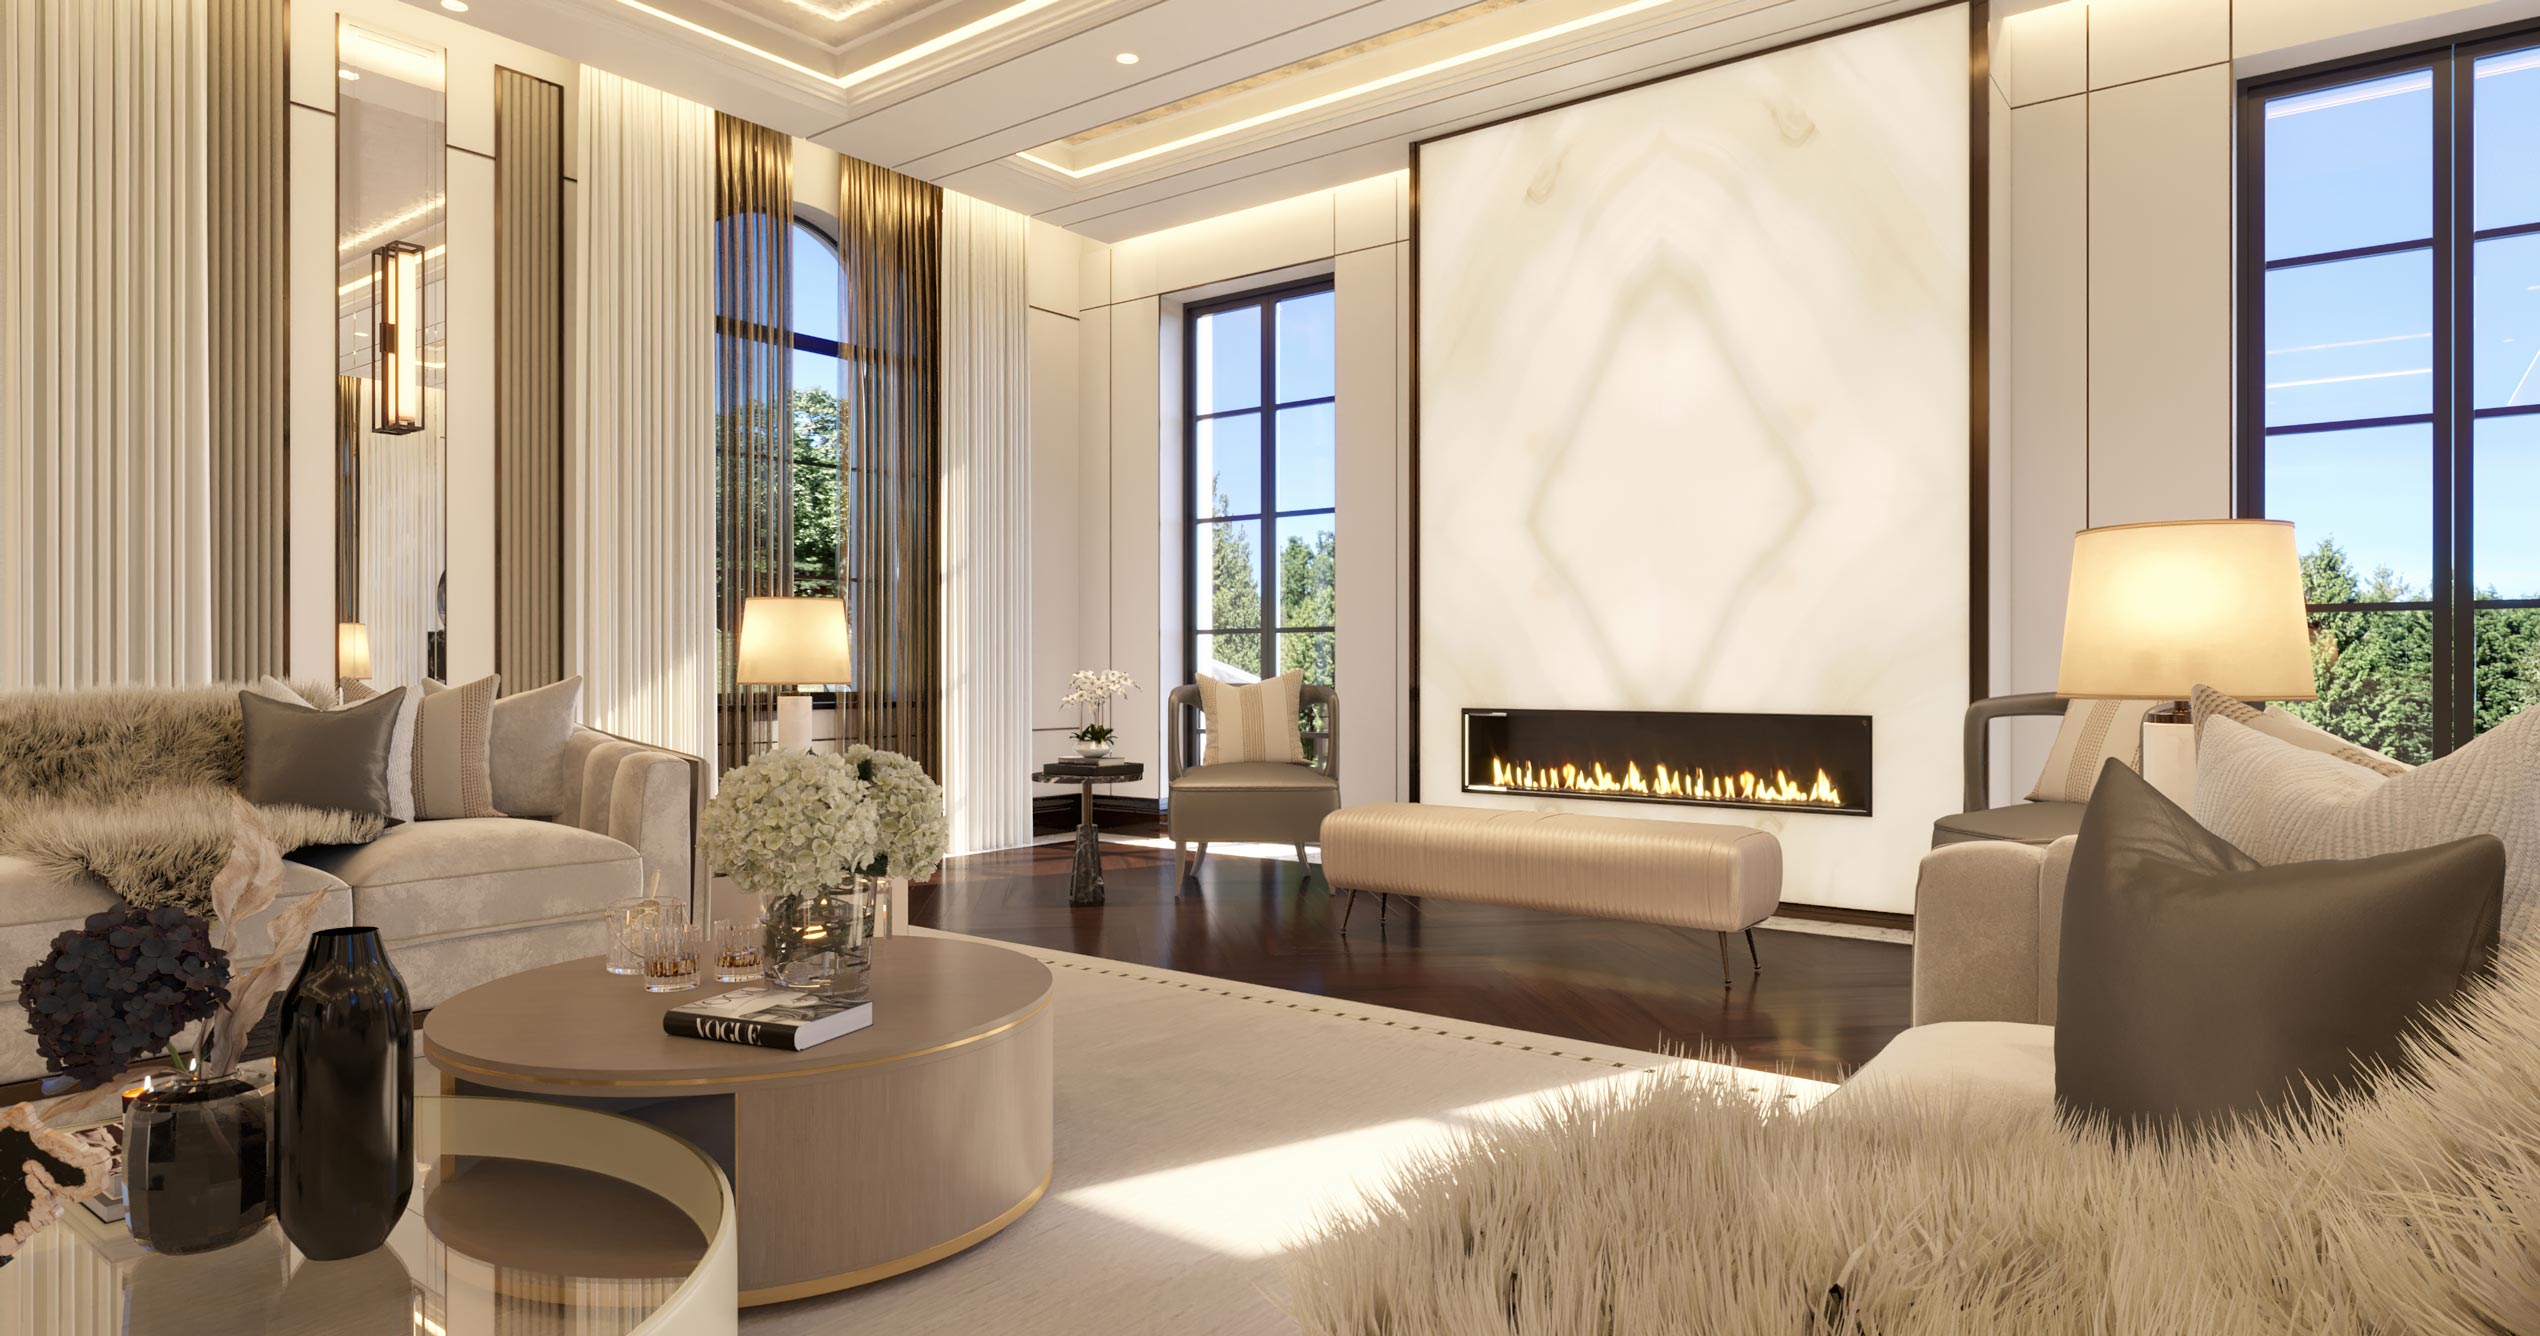 Redwood Luxury High End Residential Interior Design CGI Visual by Unit4 Studio